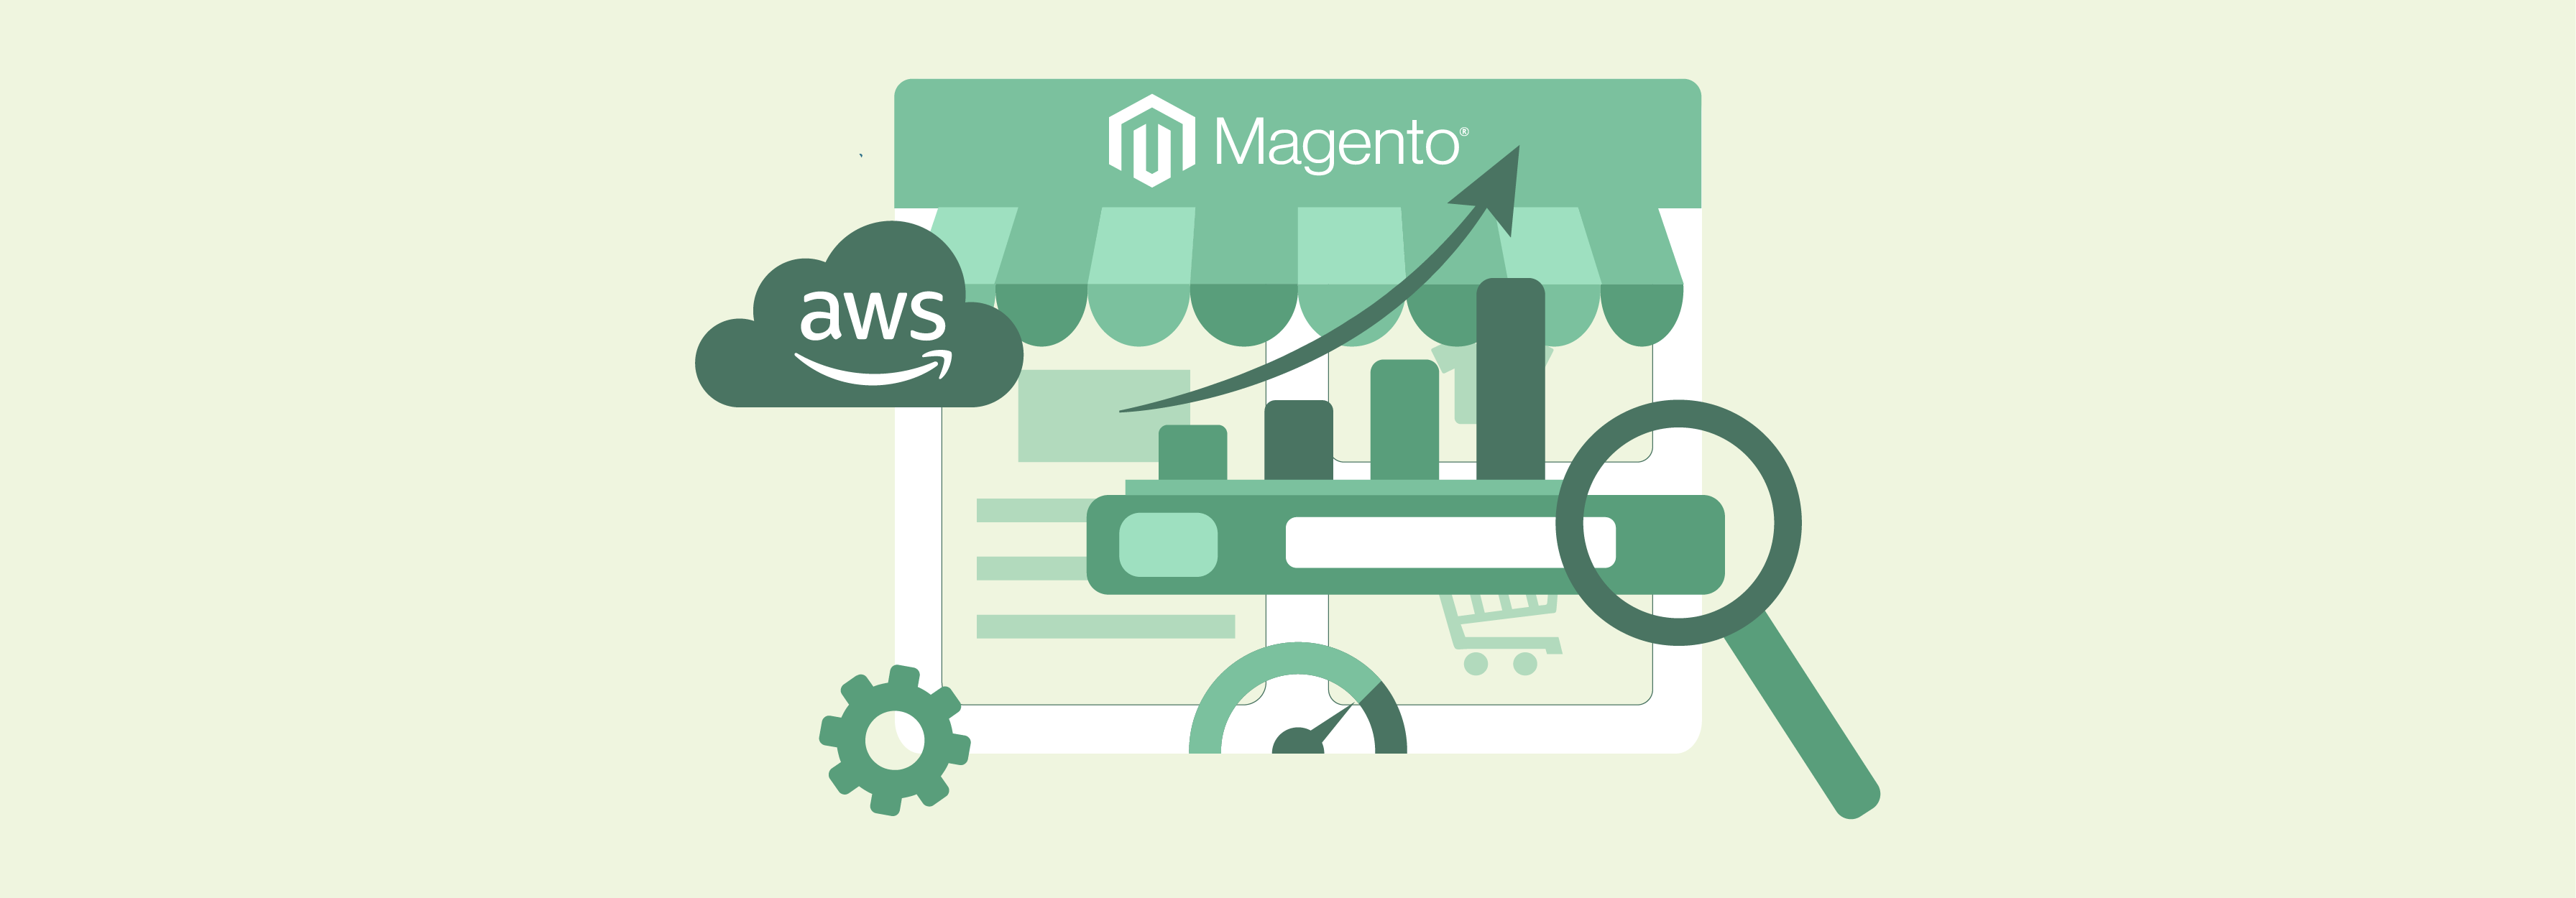 What is Magento 2 AWS Elasticsearch?